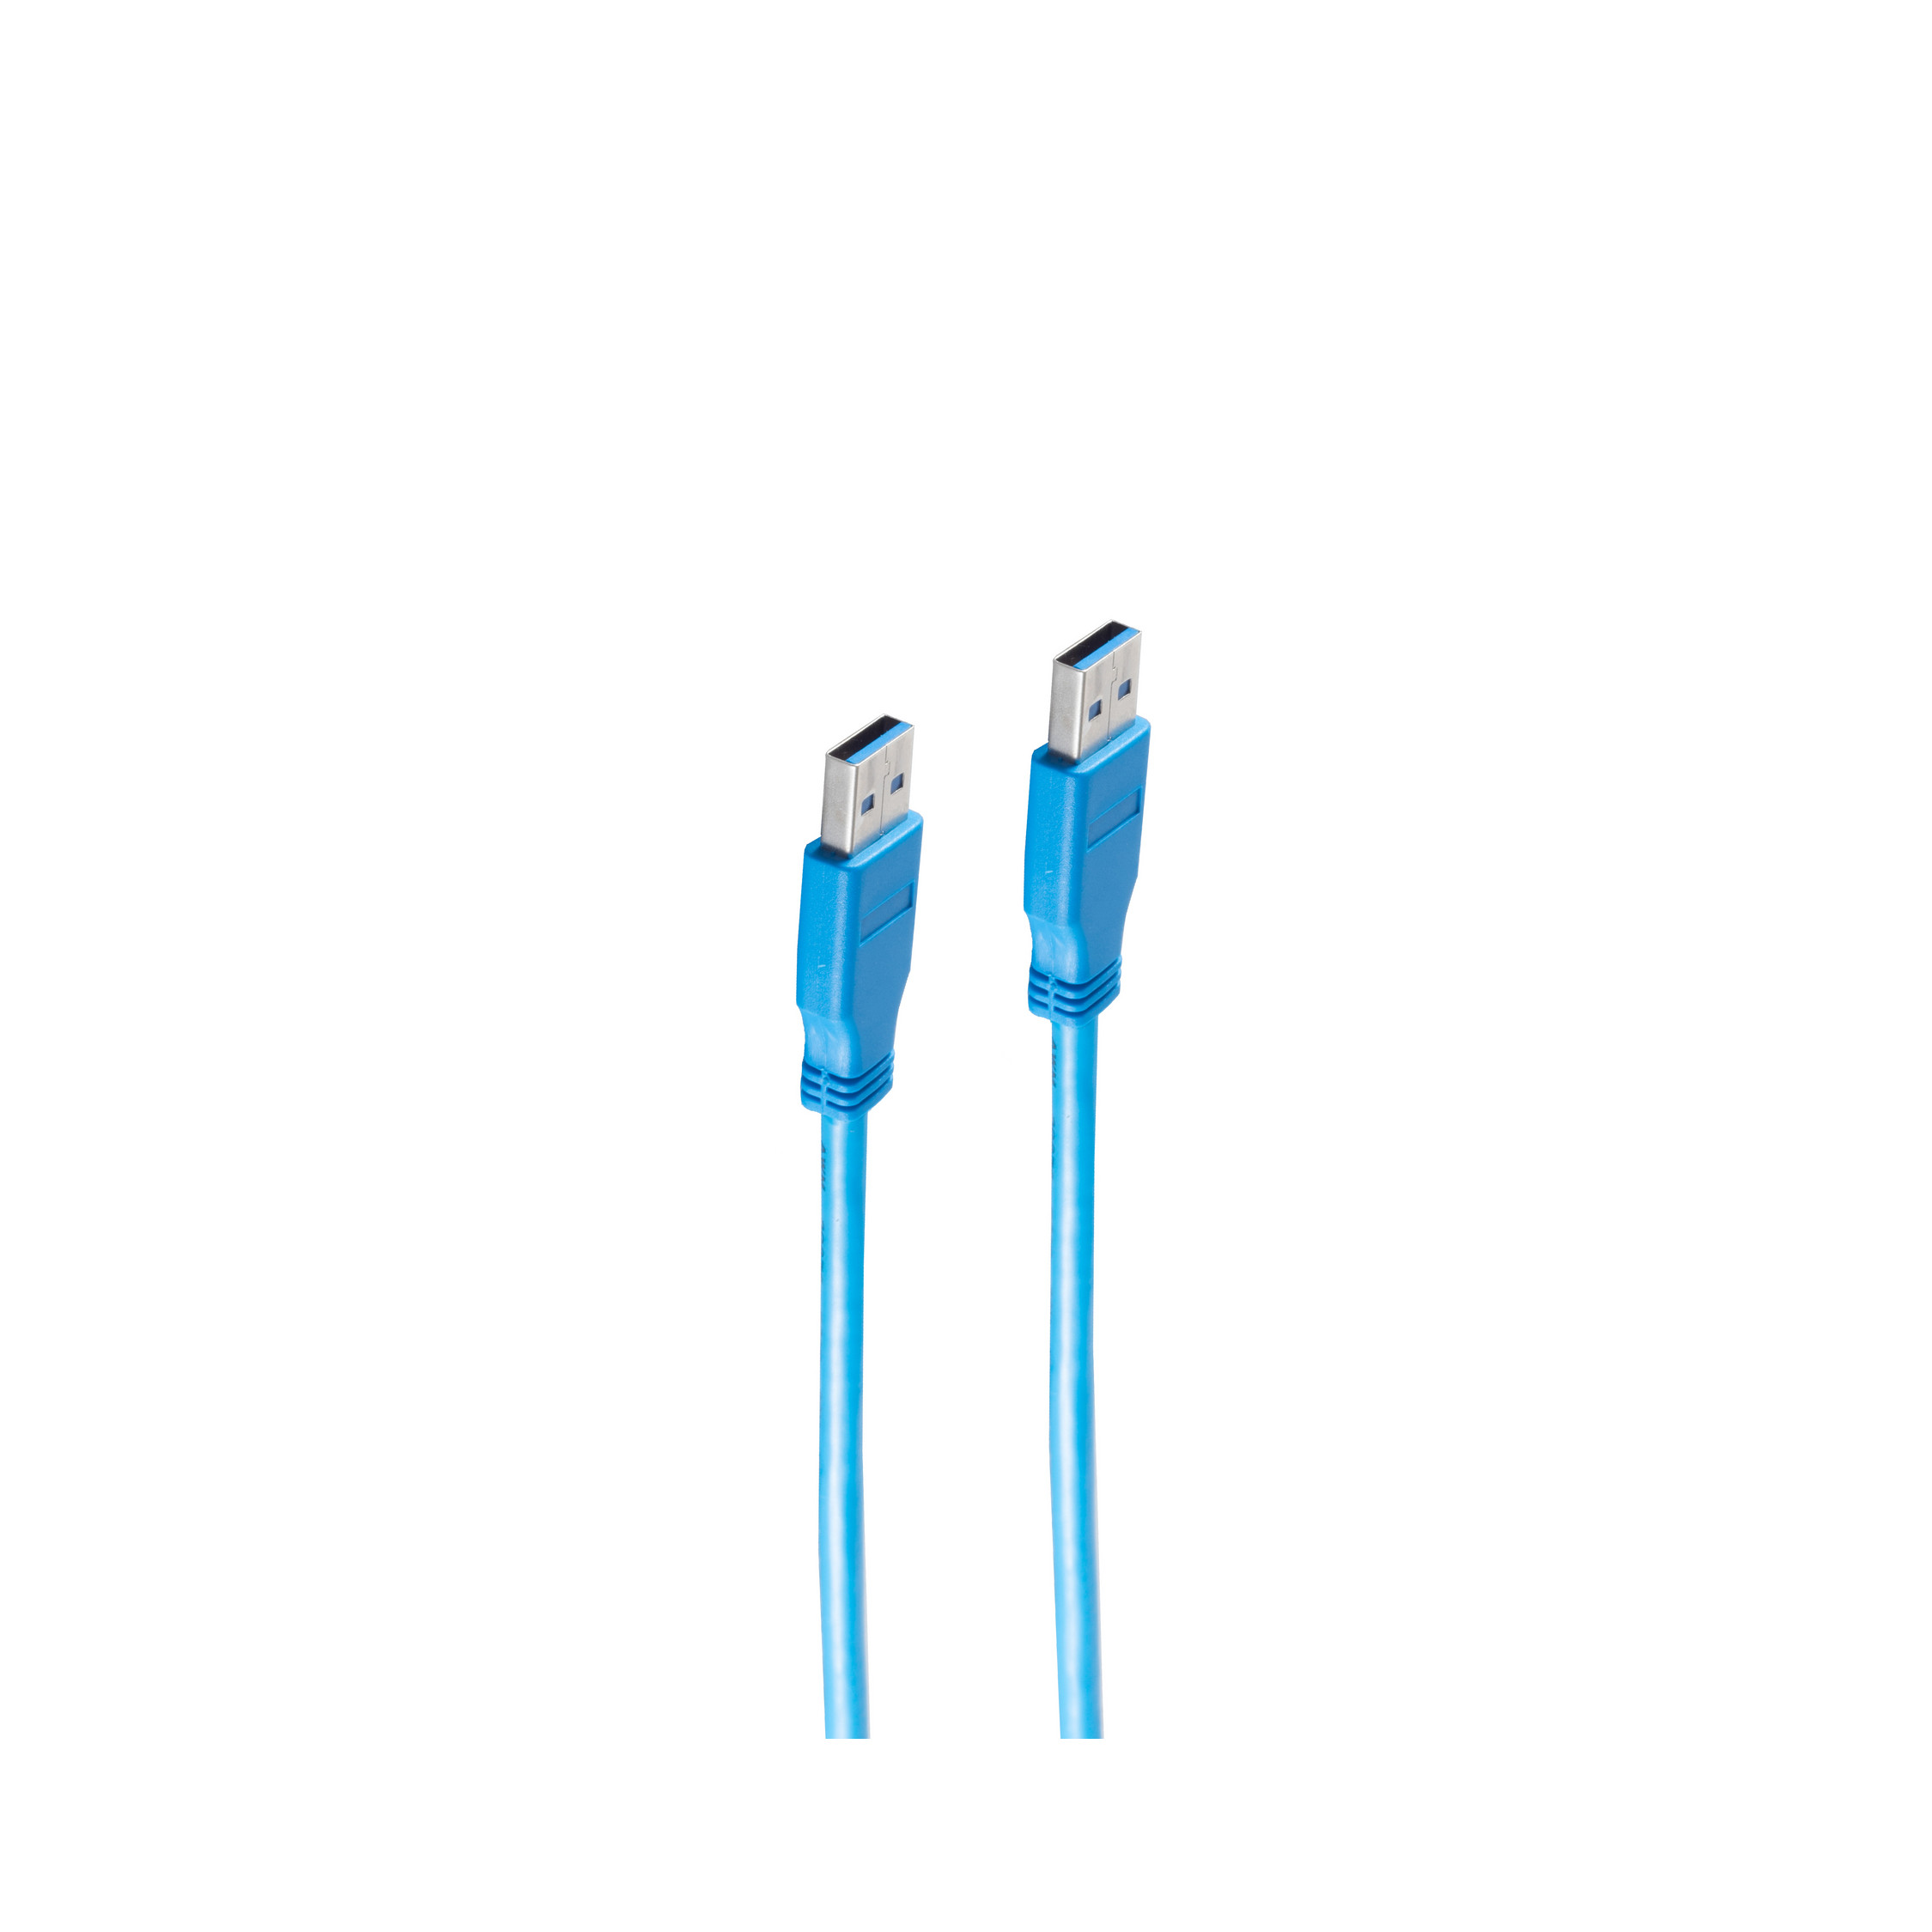 SHIVERPEAKS USB Kabel A Stecker 0,5m blau 3.0 Kabel USB USB A Stecker 